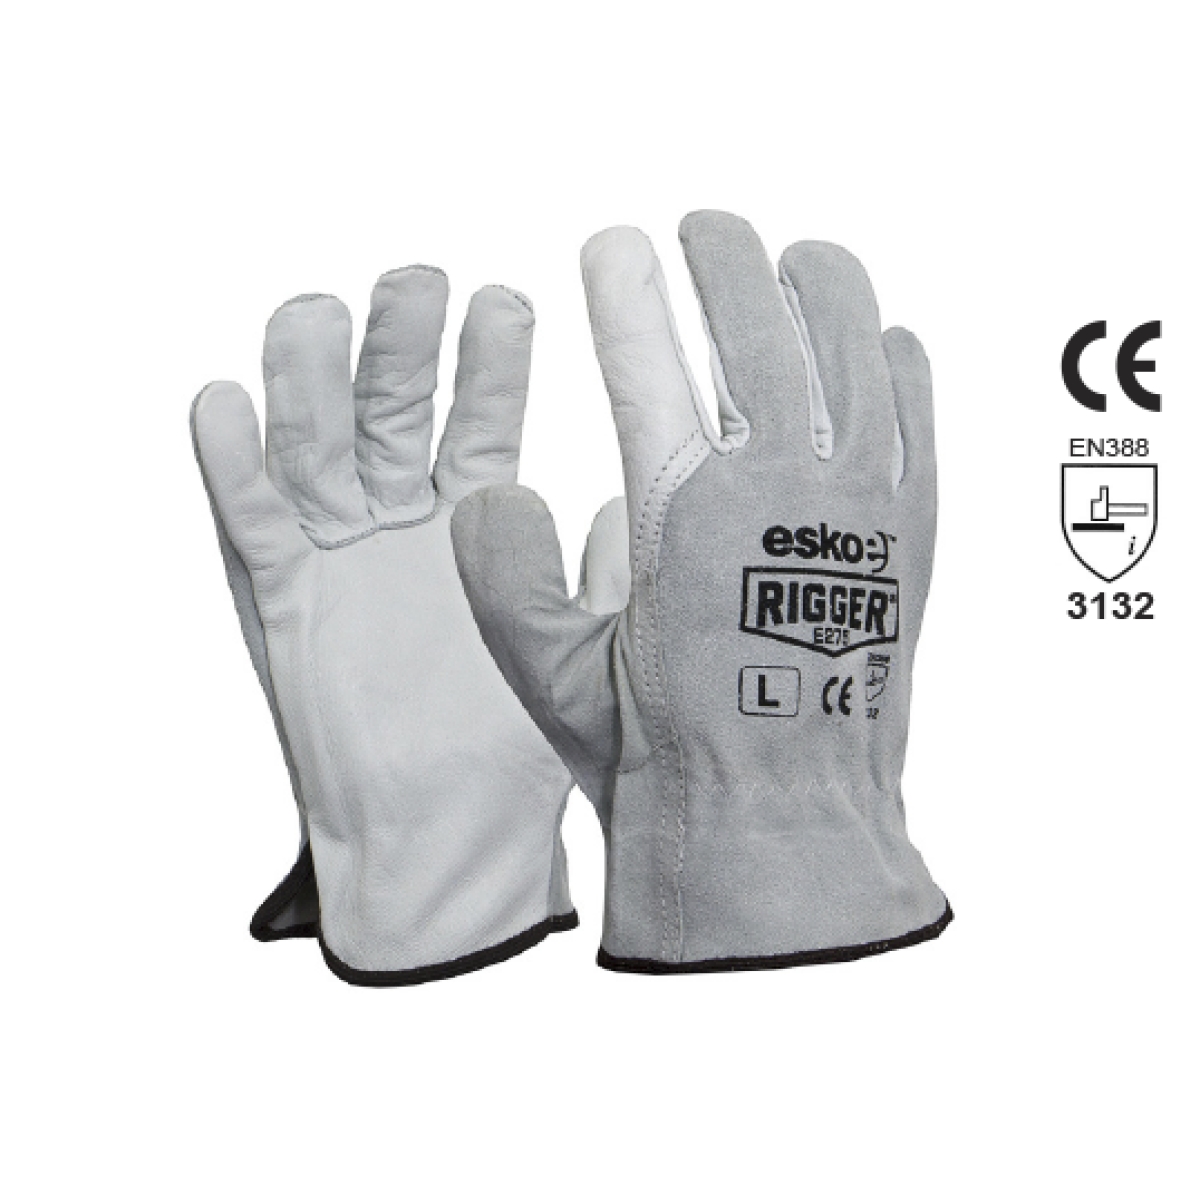 ESKO Rigger Leather Safety Gloves E275